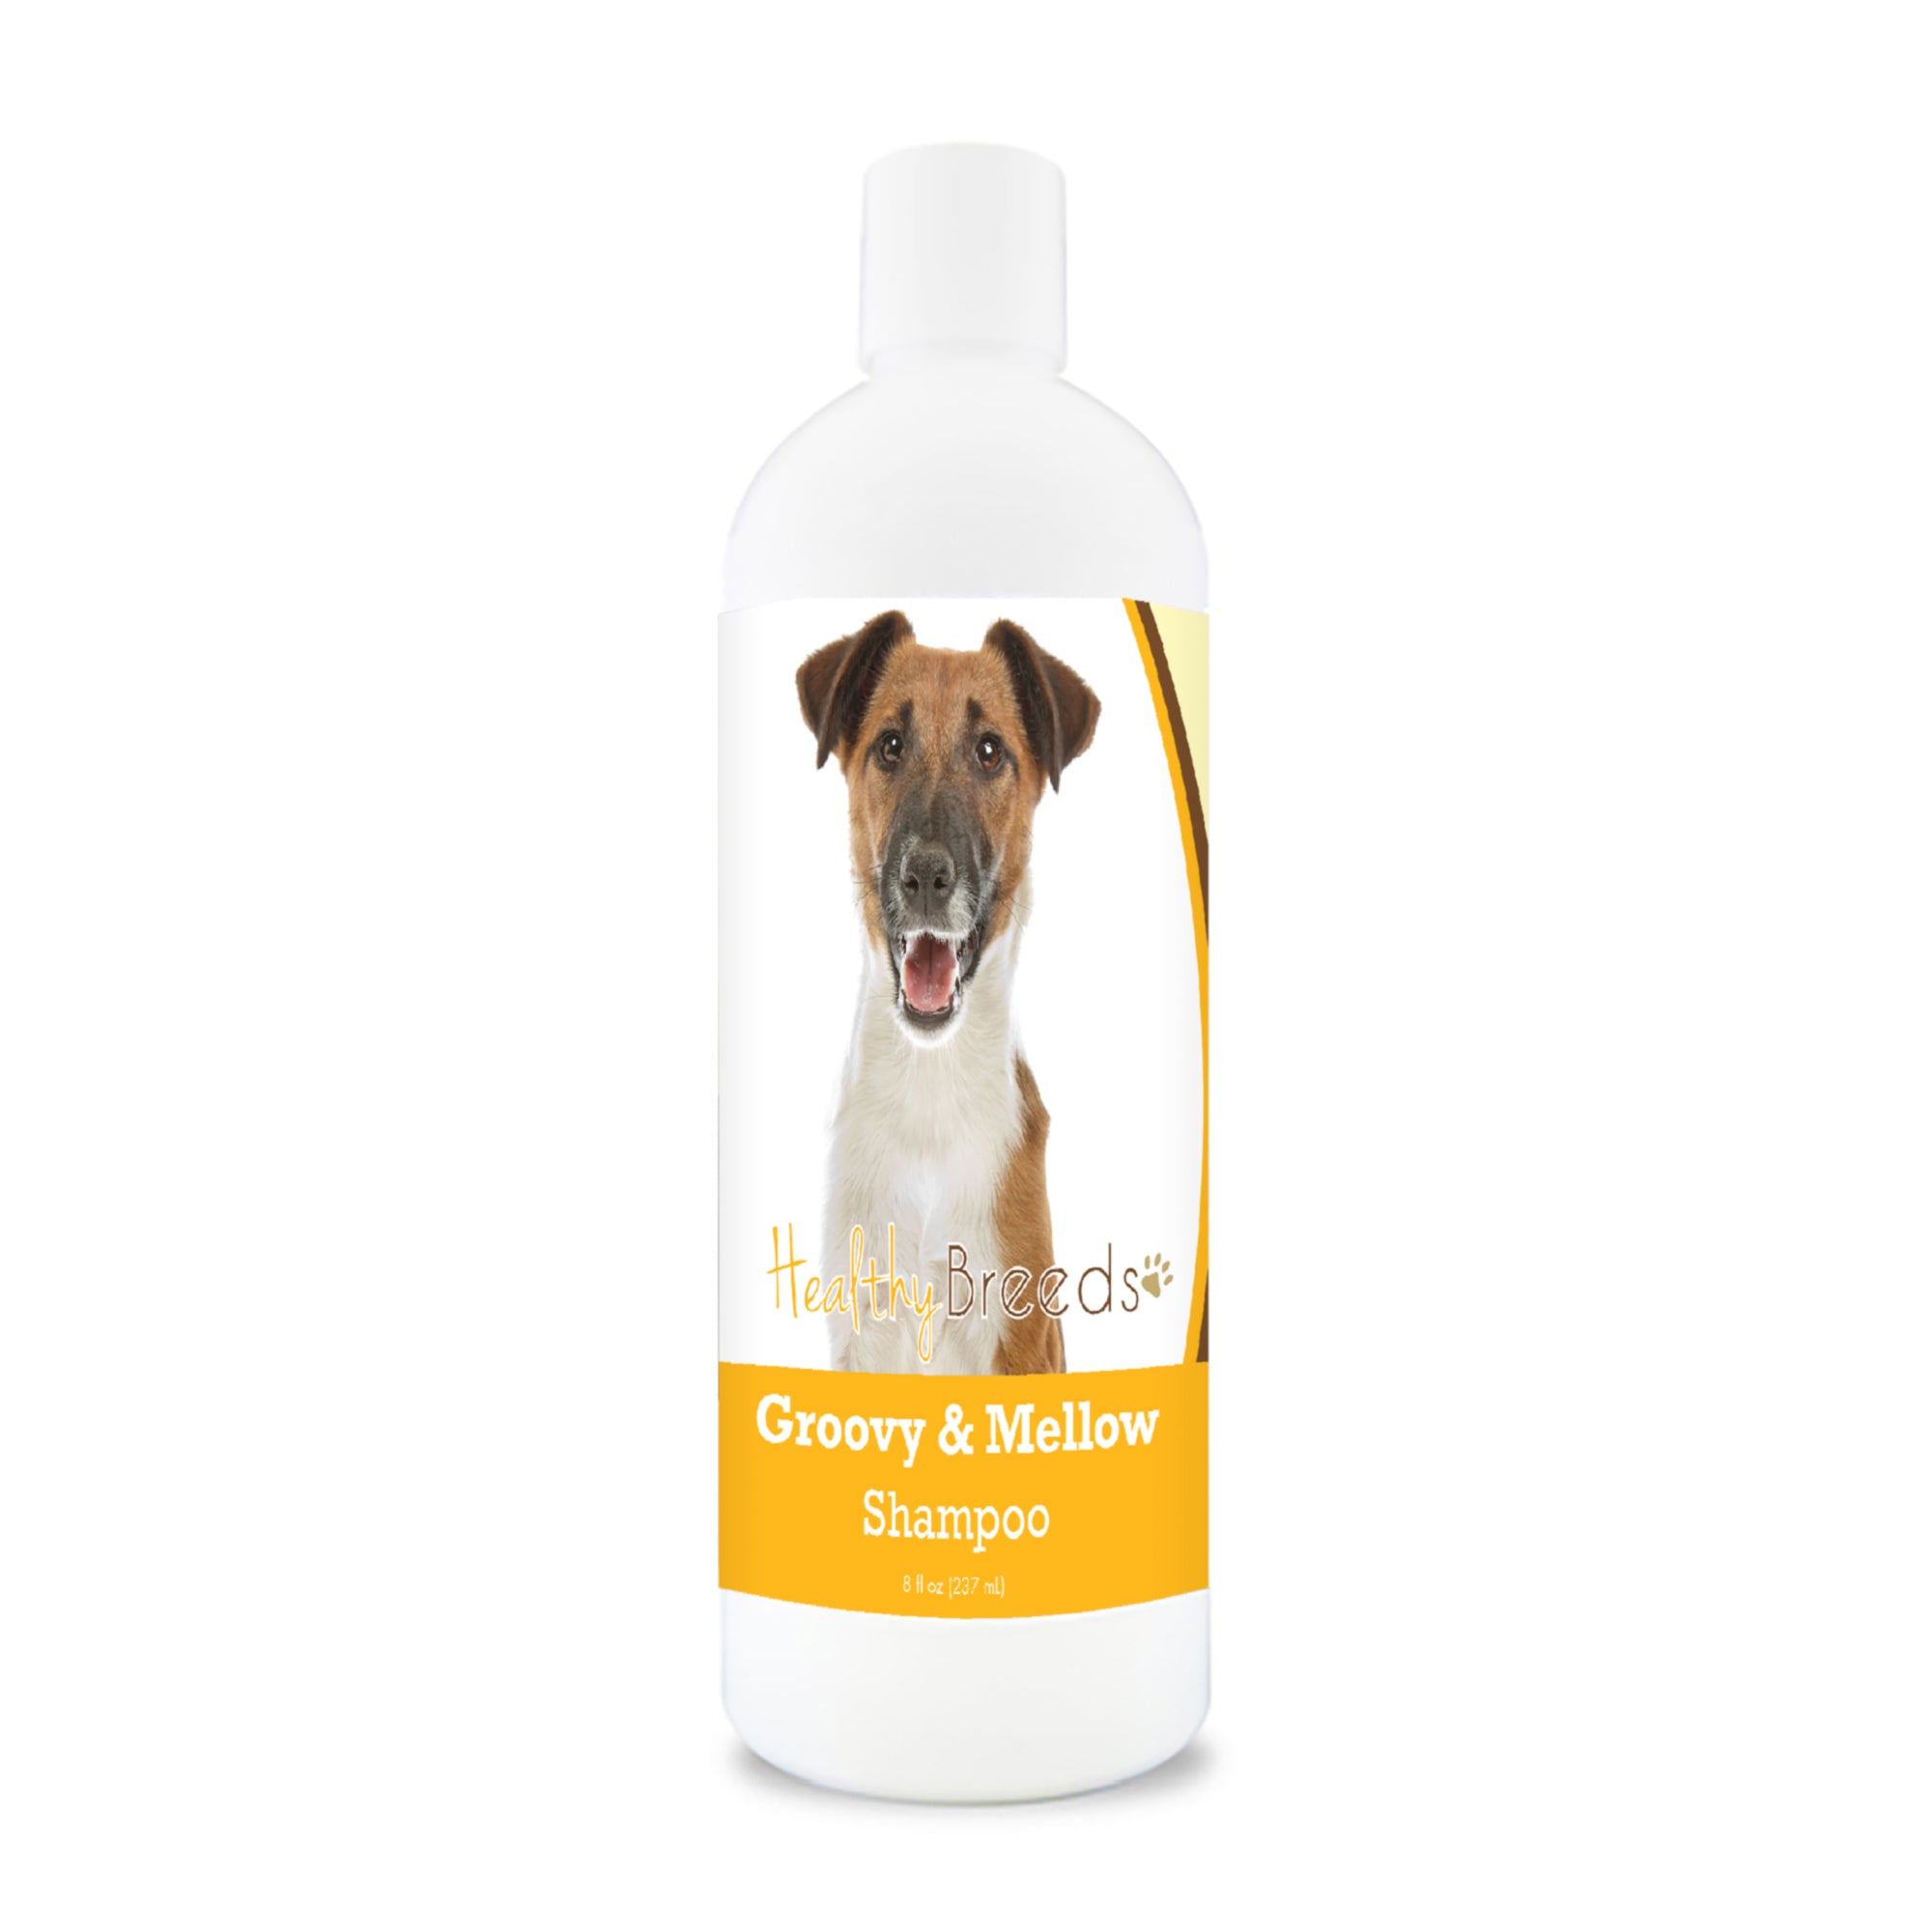 Smooth Fox Terrier Groovy & Mellow Shampoo 8 oz